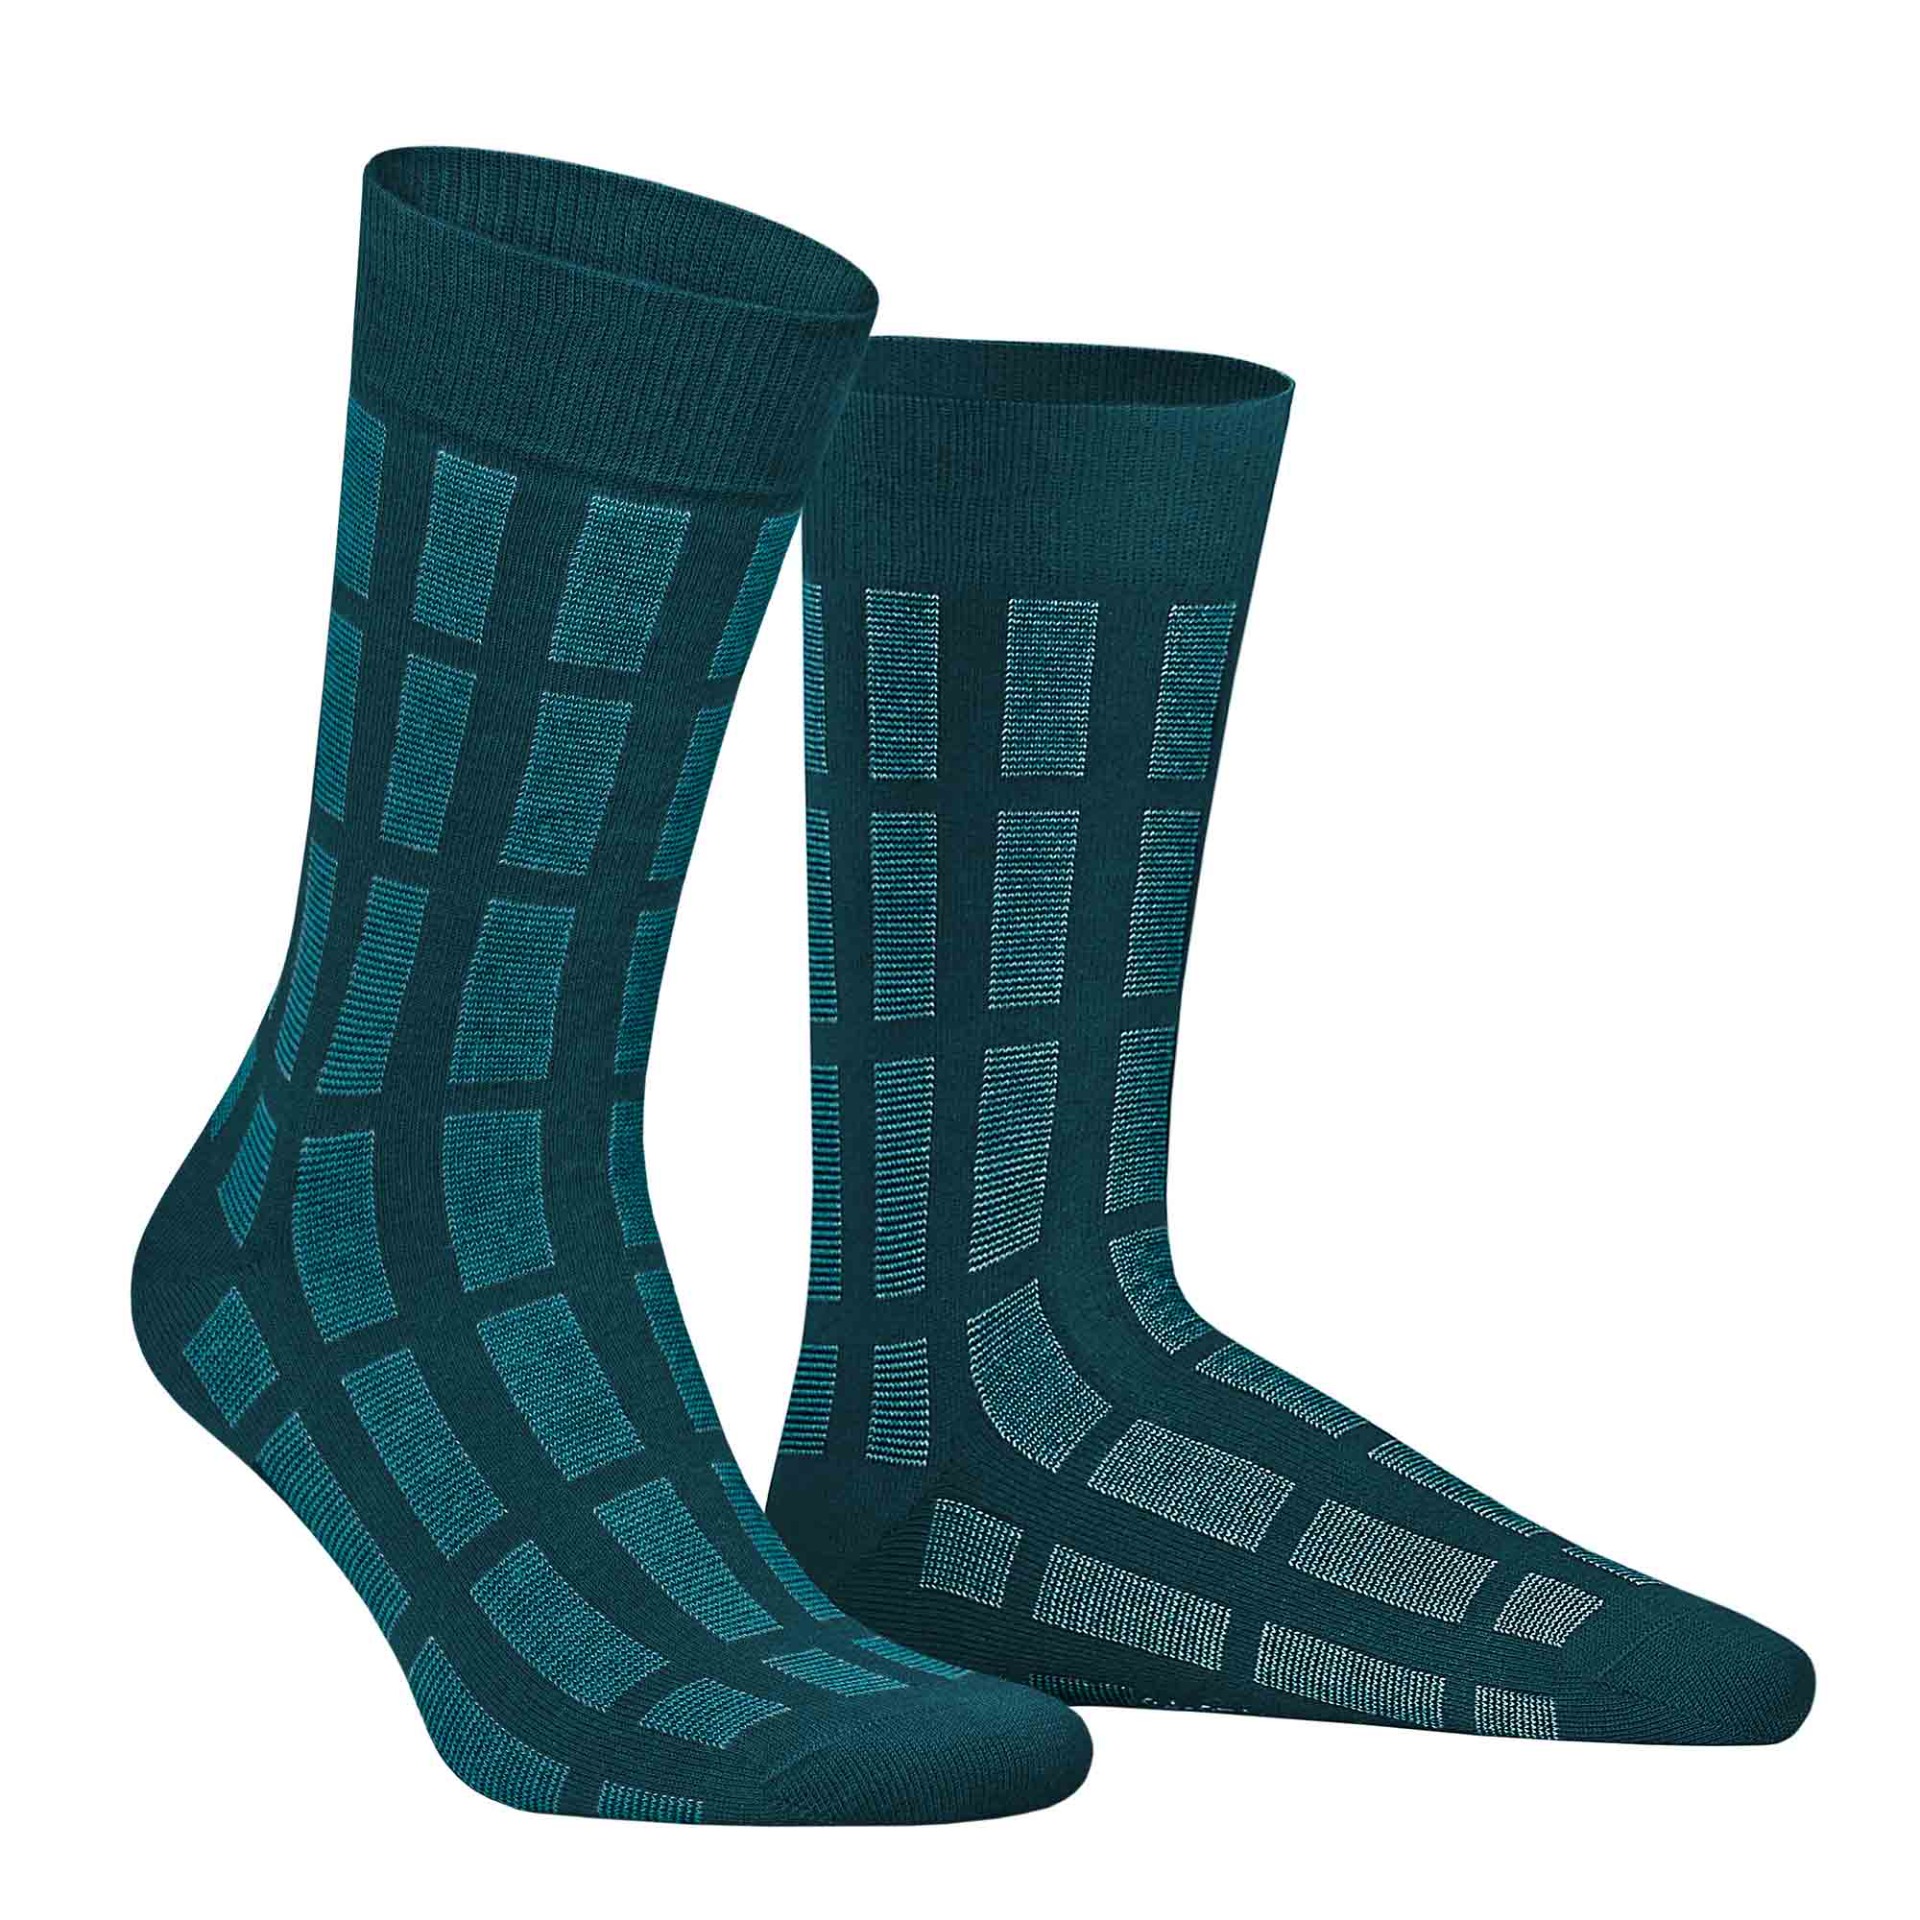 HUDSON Herren PIN -  43/46 - Socken mit Streifen-Muster - Capri blue 0111 (Blau)